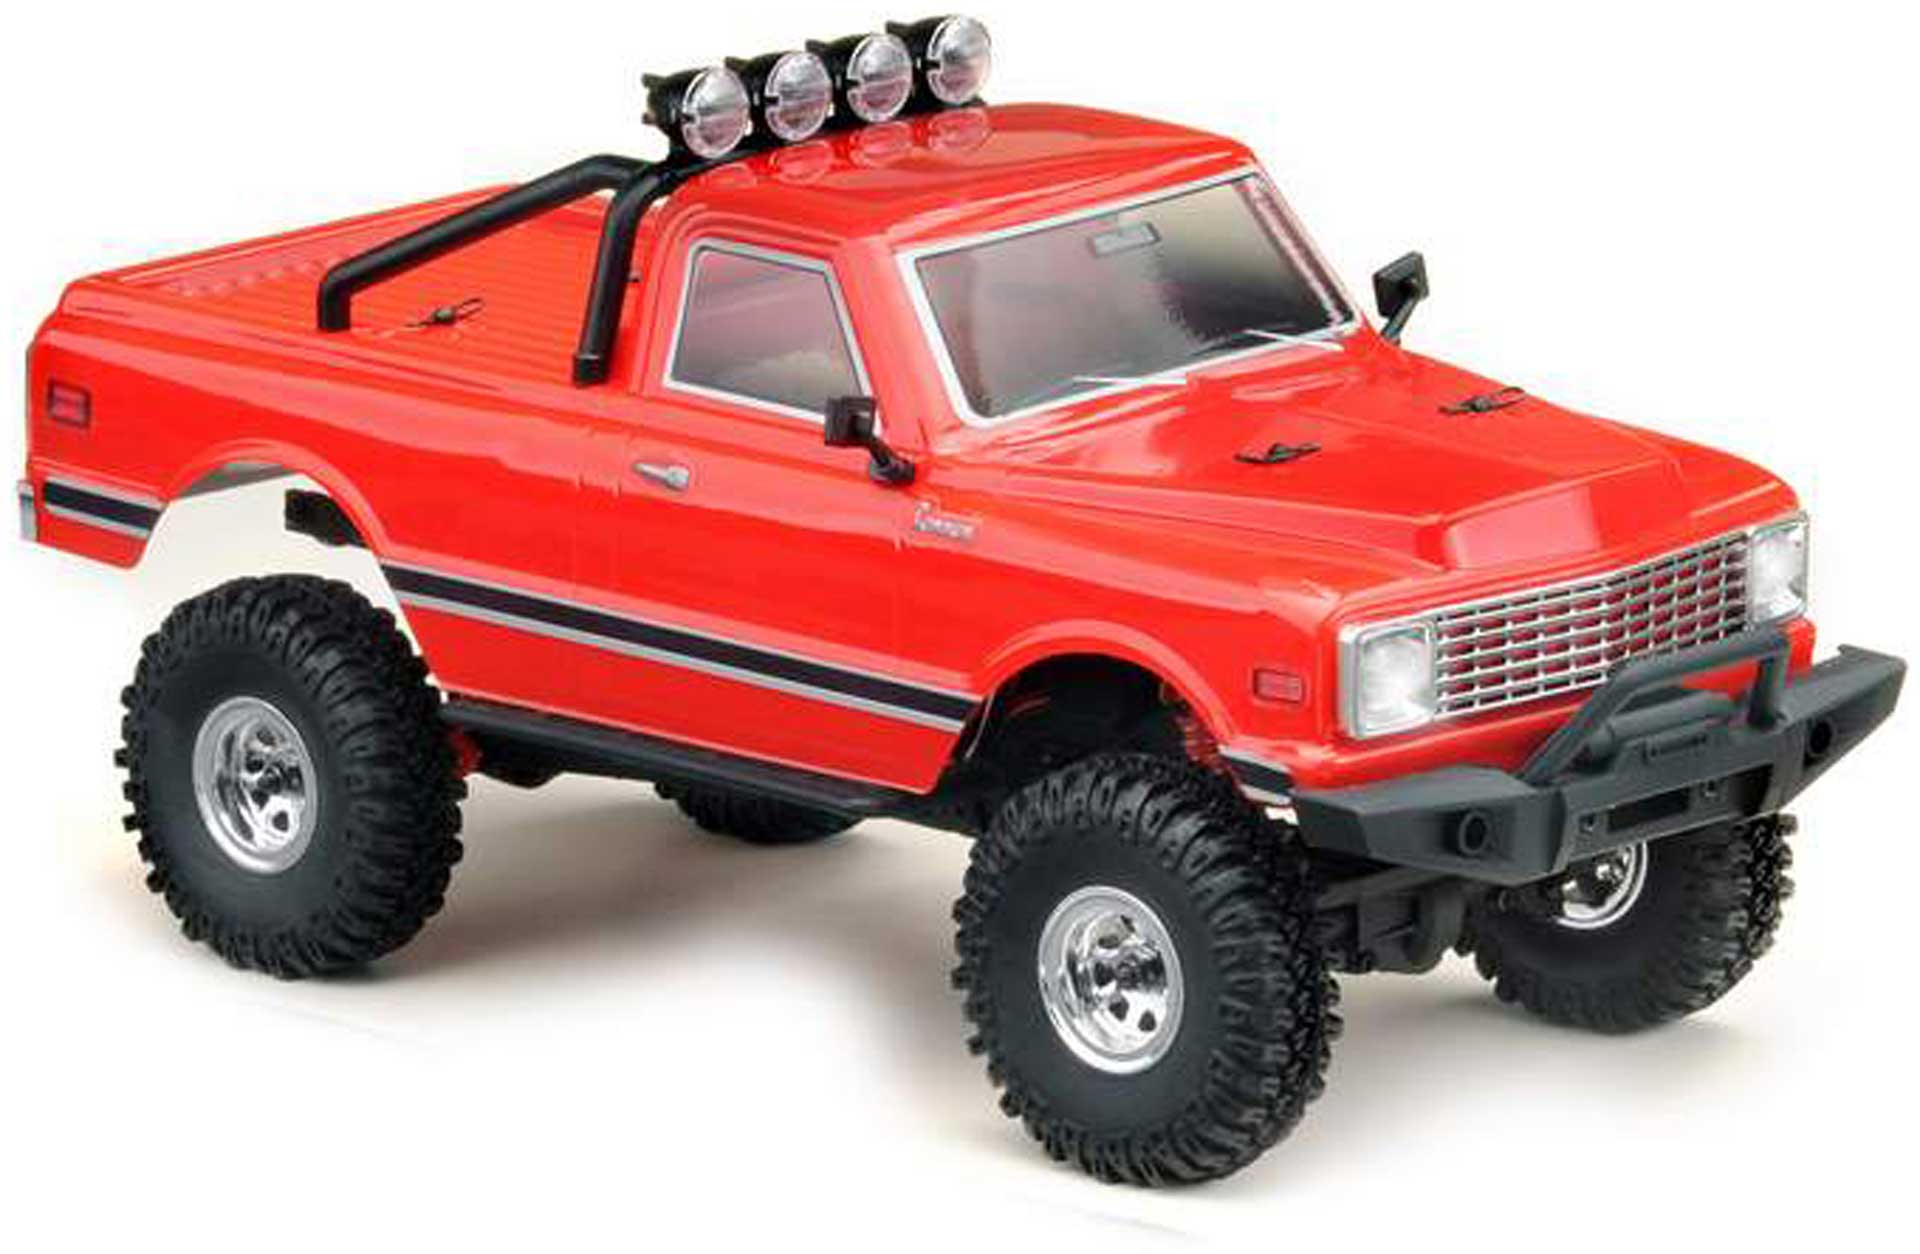 ABSIMA 1:18 Mini Crawler "C10 Pickup" rouge RTR